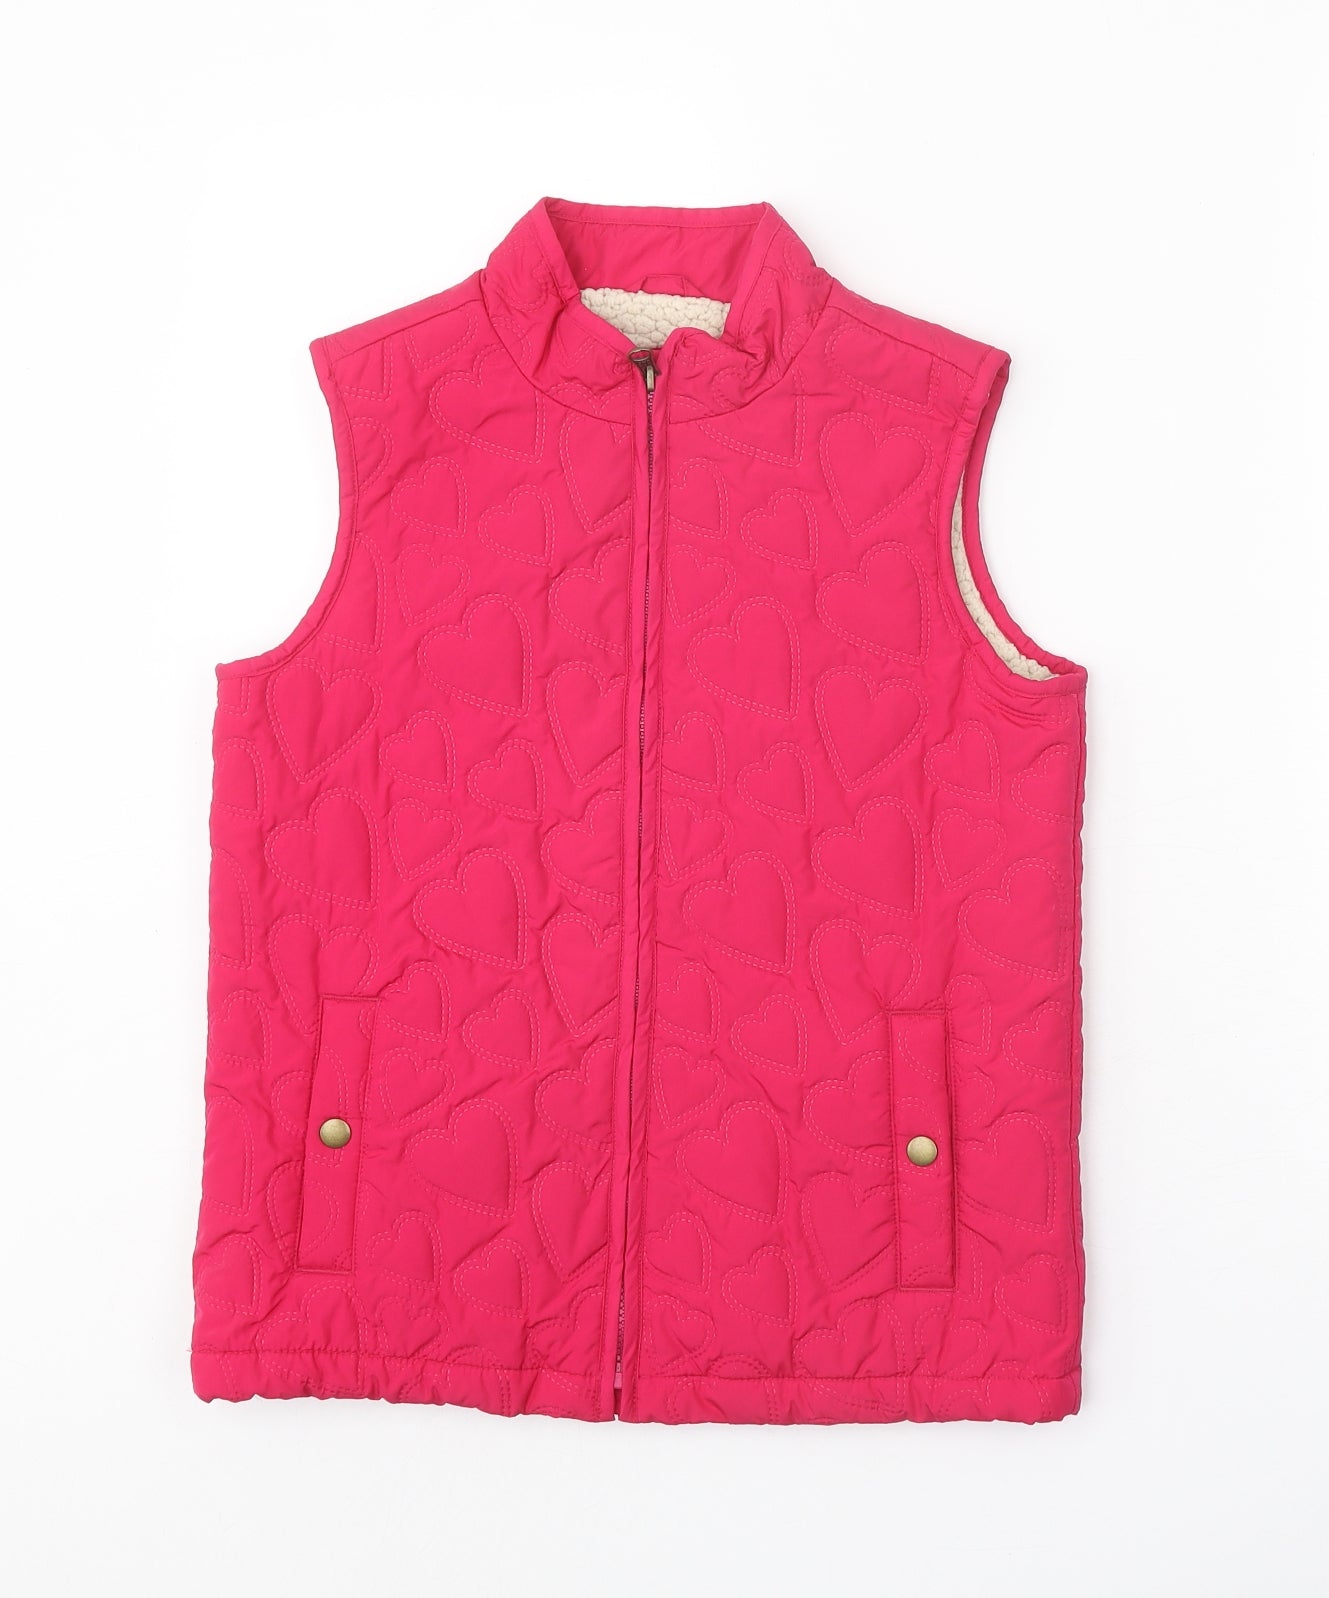 Gap Girls Pink Geometric Gilet Jacket Size XL Zip